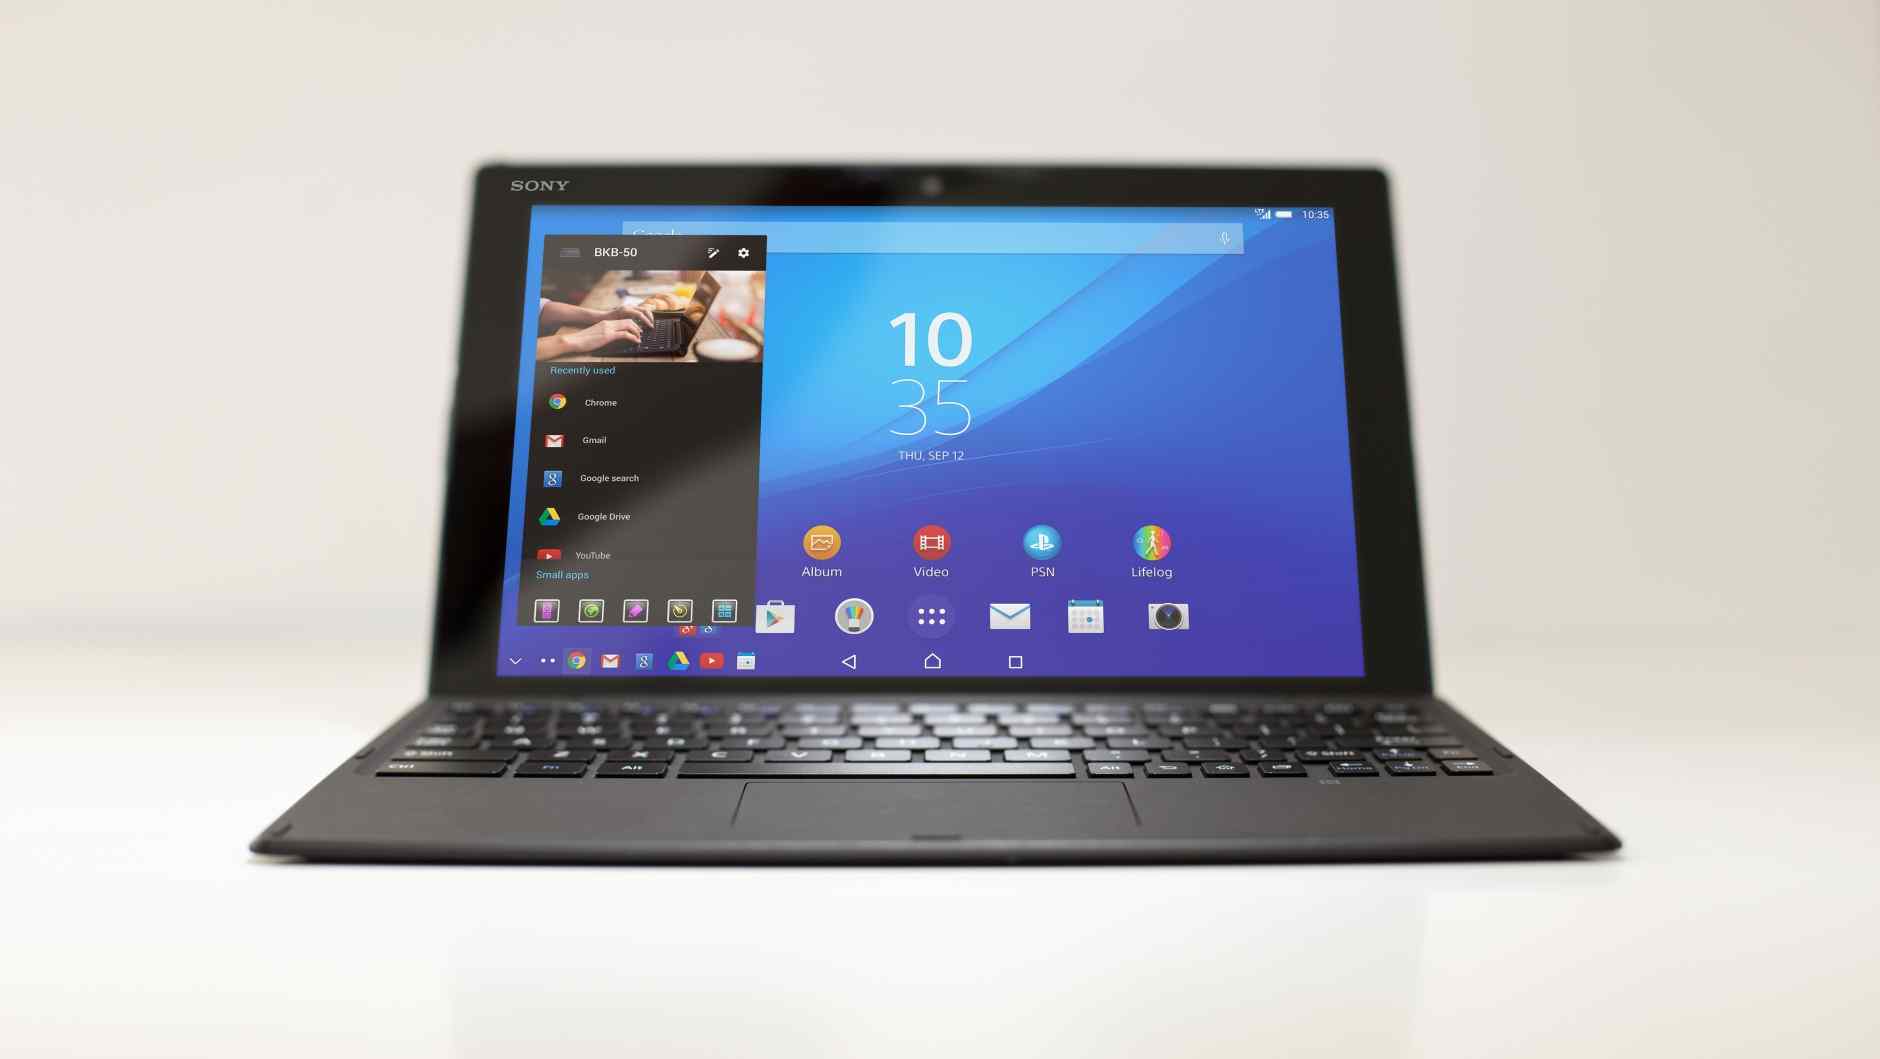 xperia-z4-tablet-business-tablet-into-laptop-26ef6fb3475dcf05c518ef7400089051-940x2